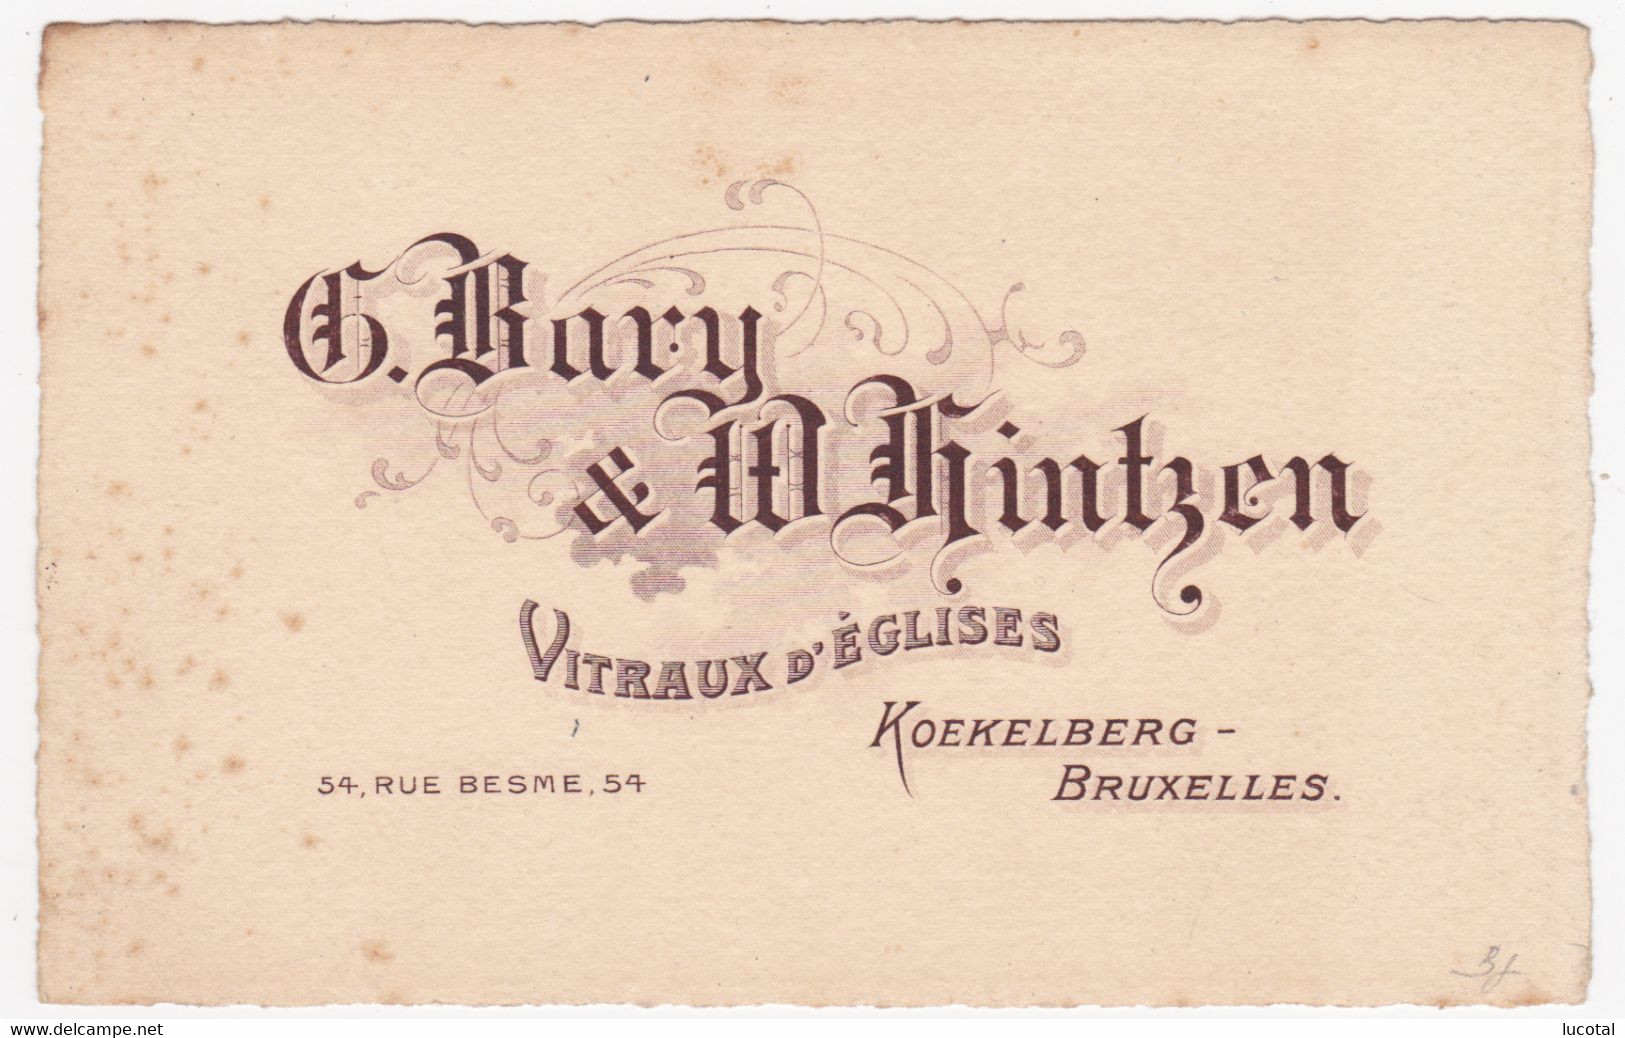 Koekelberg - Carte Publicitaire - Vitraux D'Eglises - Bary & Hintzen - Rue Besme - Koekelberg